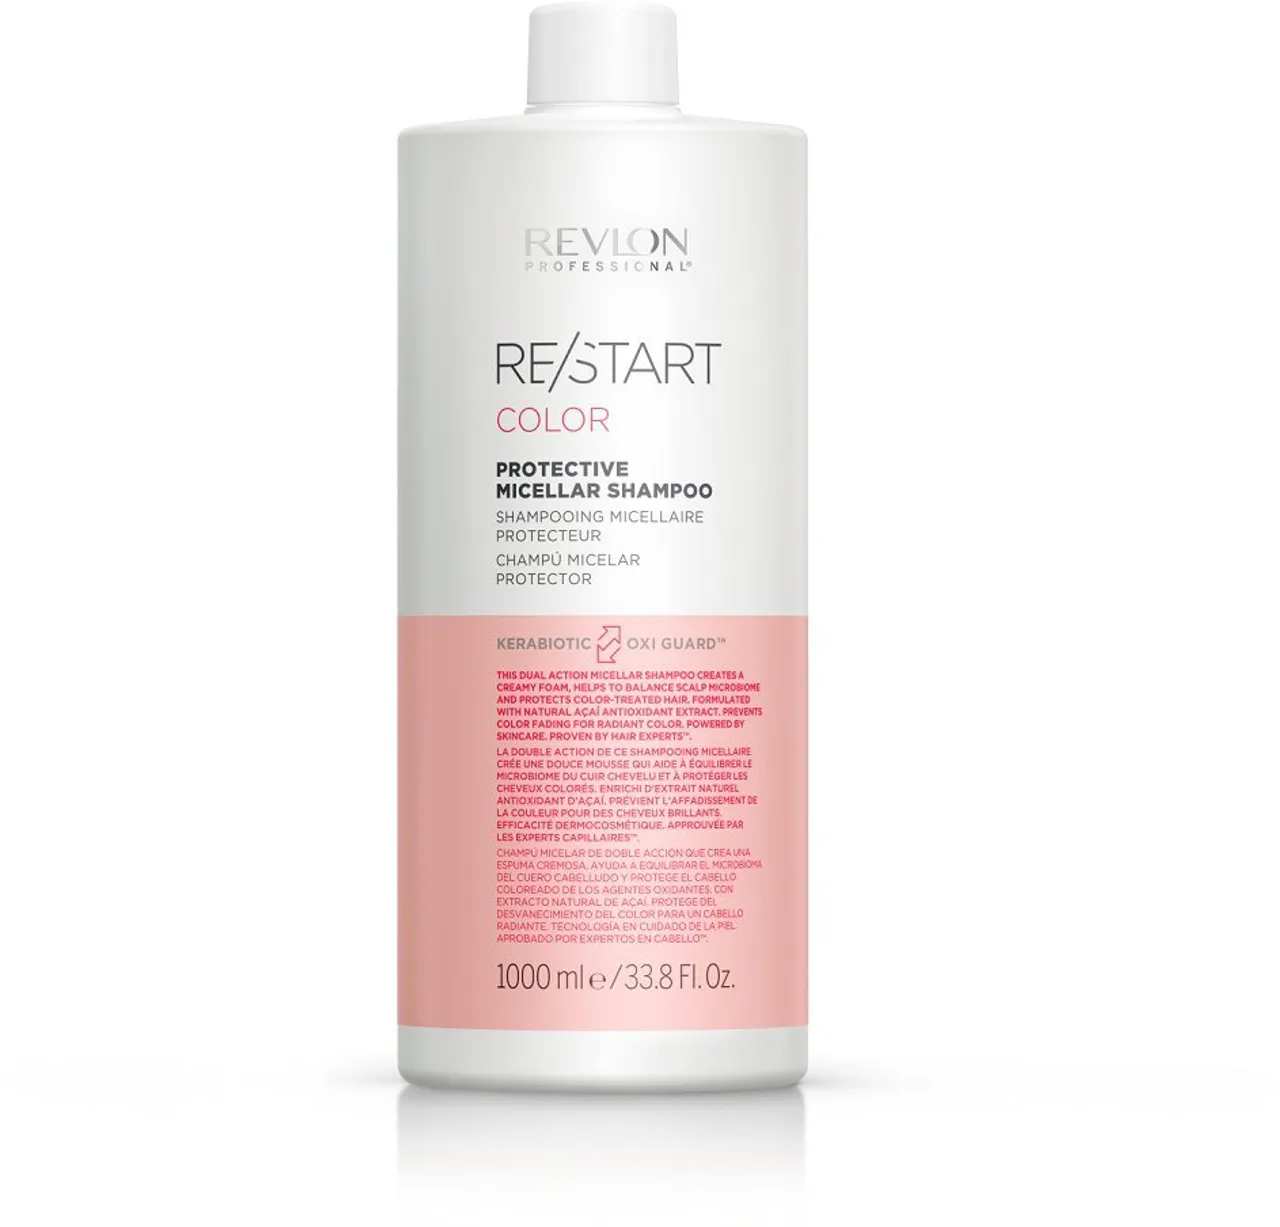 REVLON PROFESSIONAL Haarshampoo Re/Start COLOR Protective Micellar Shampoo 1000 ml